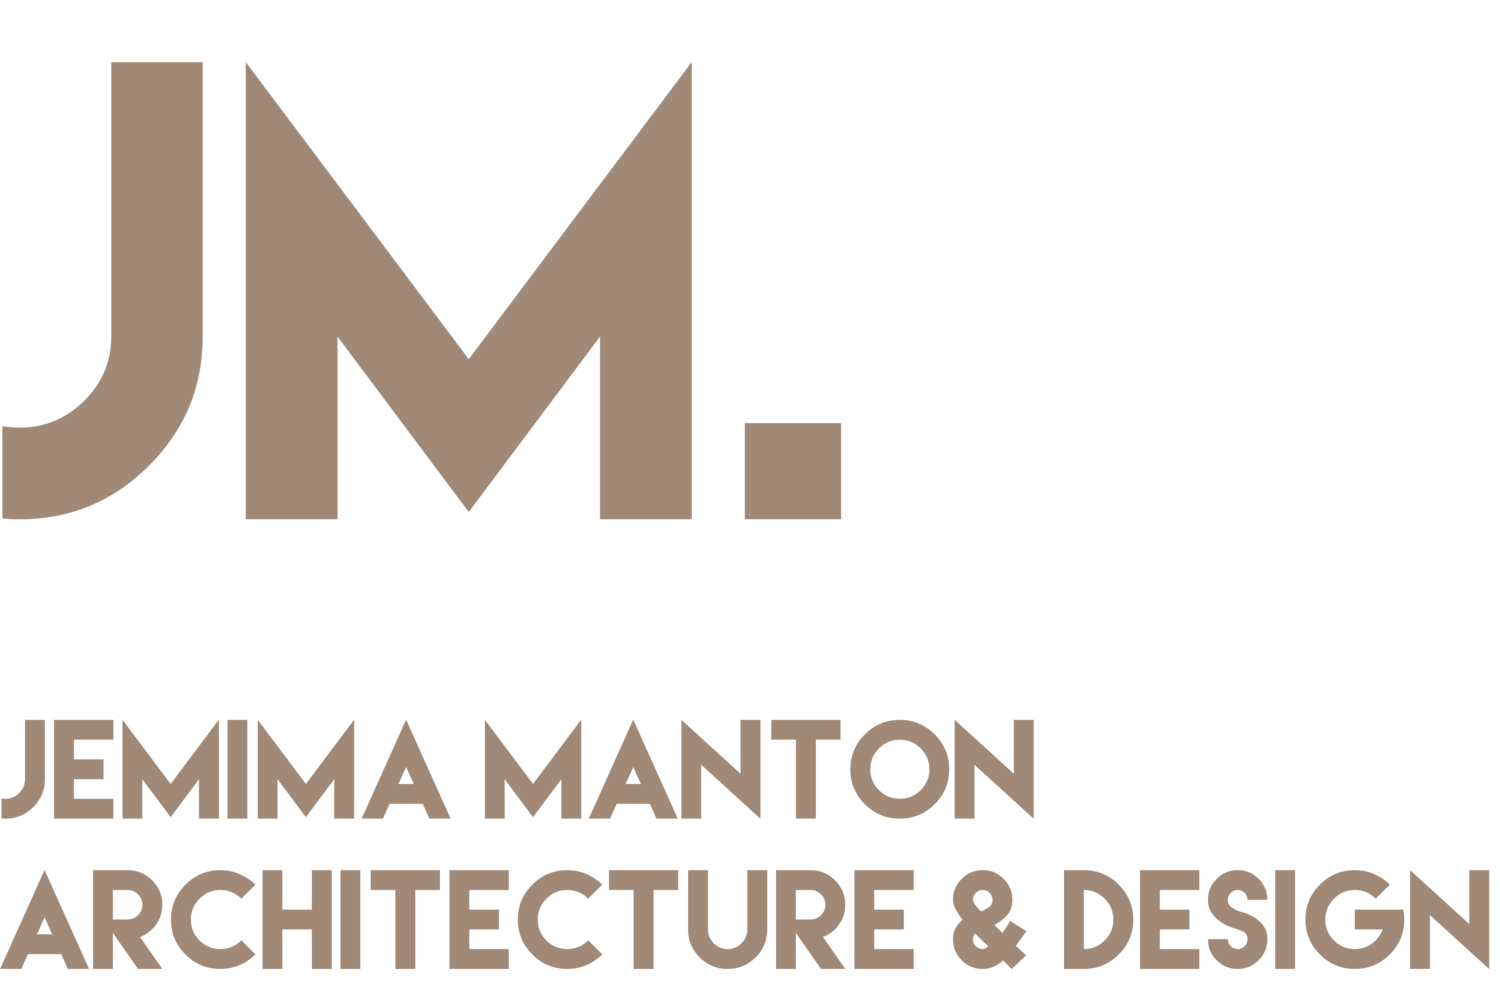 Jemima Manton Architecture + Design